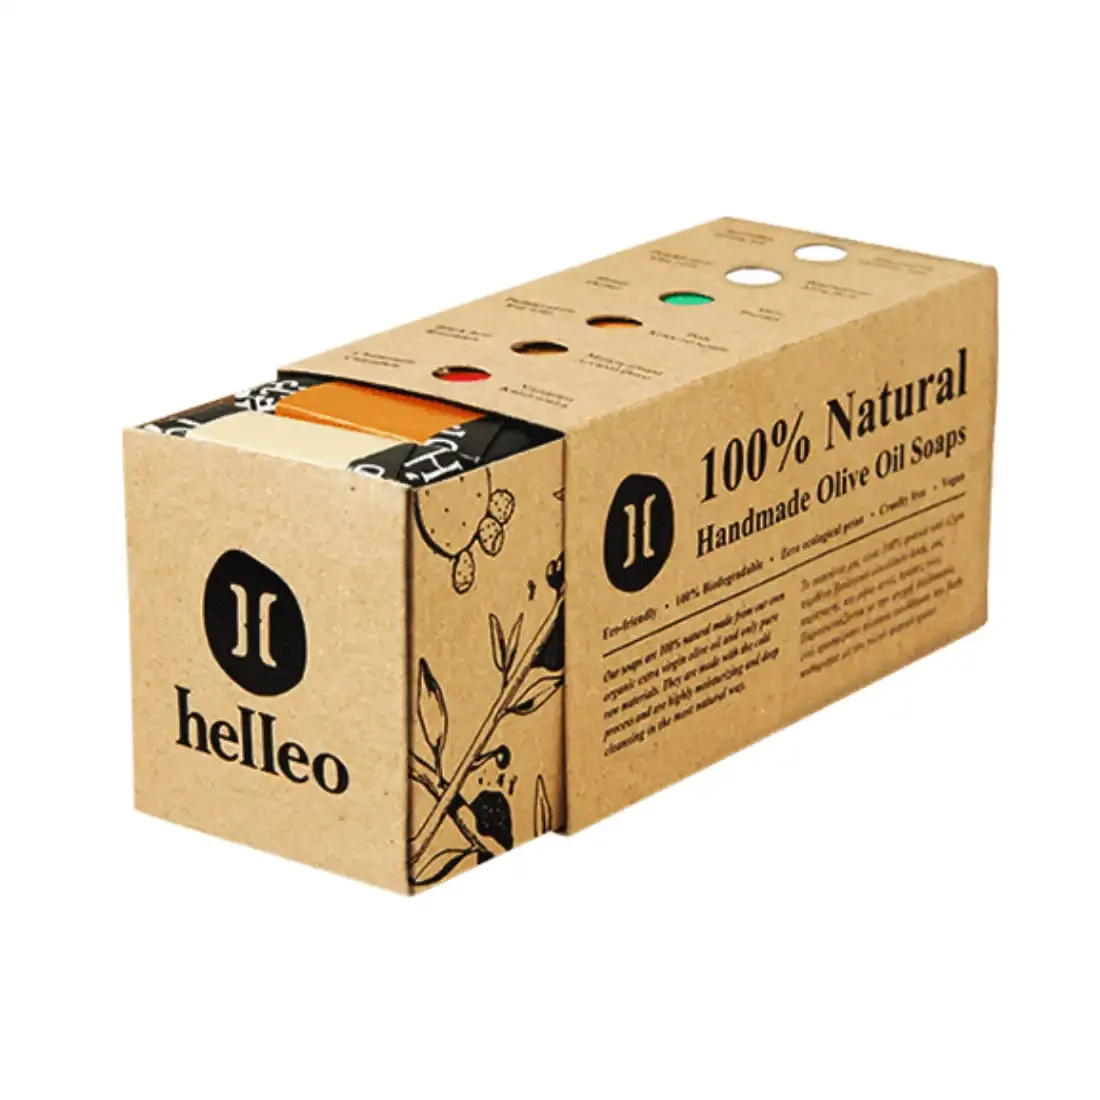 custom-design-hemp-flour-packaging-boxes